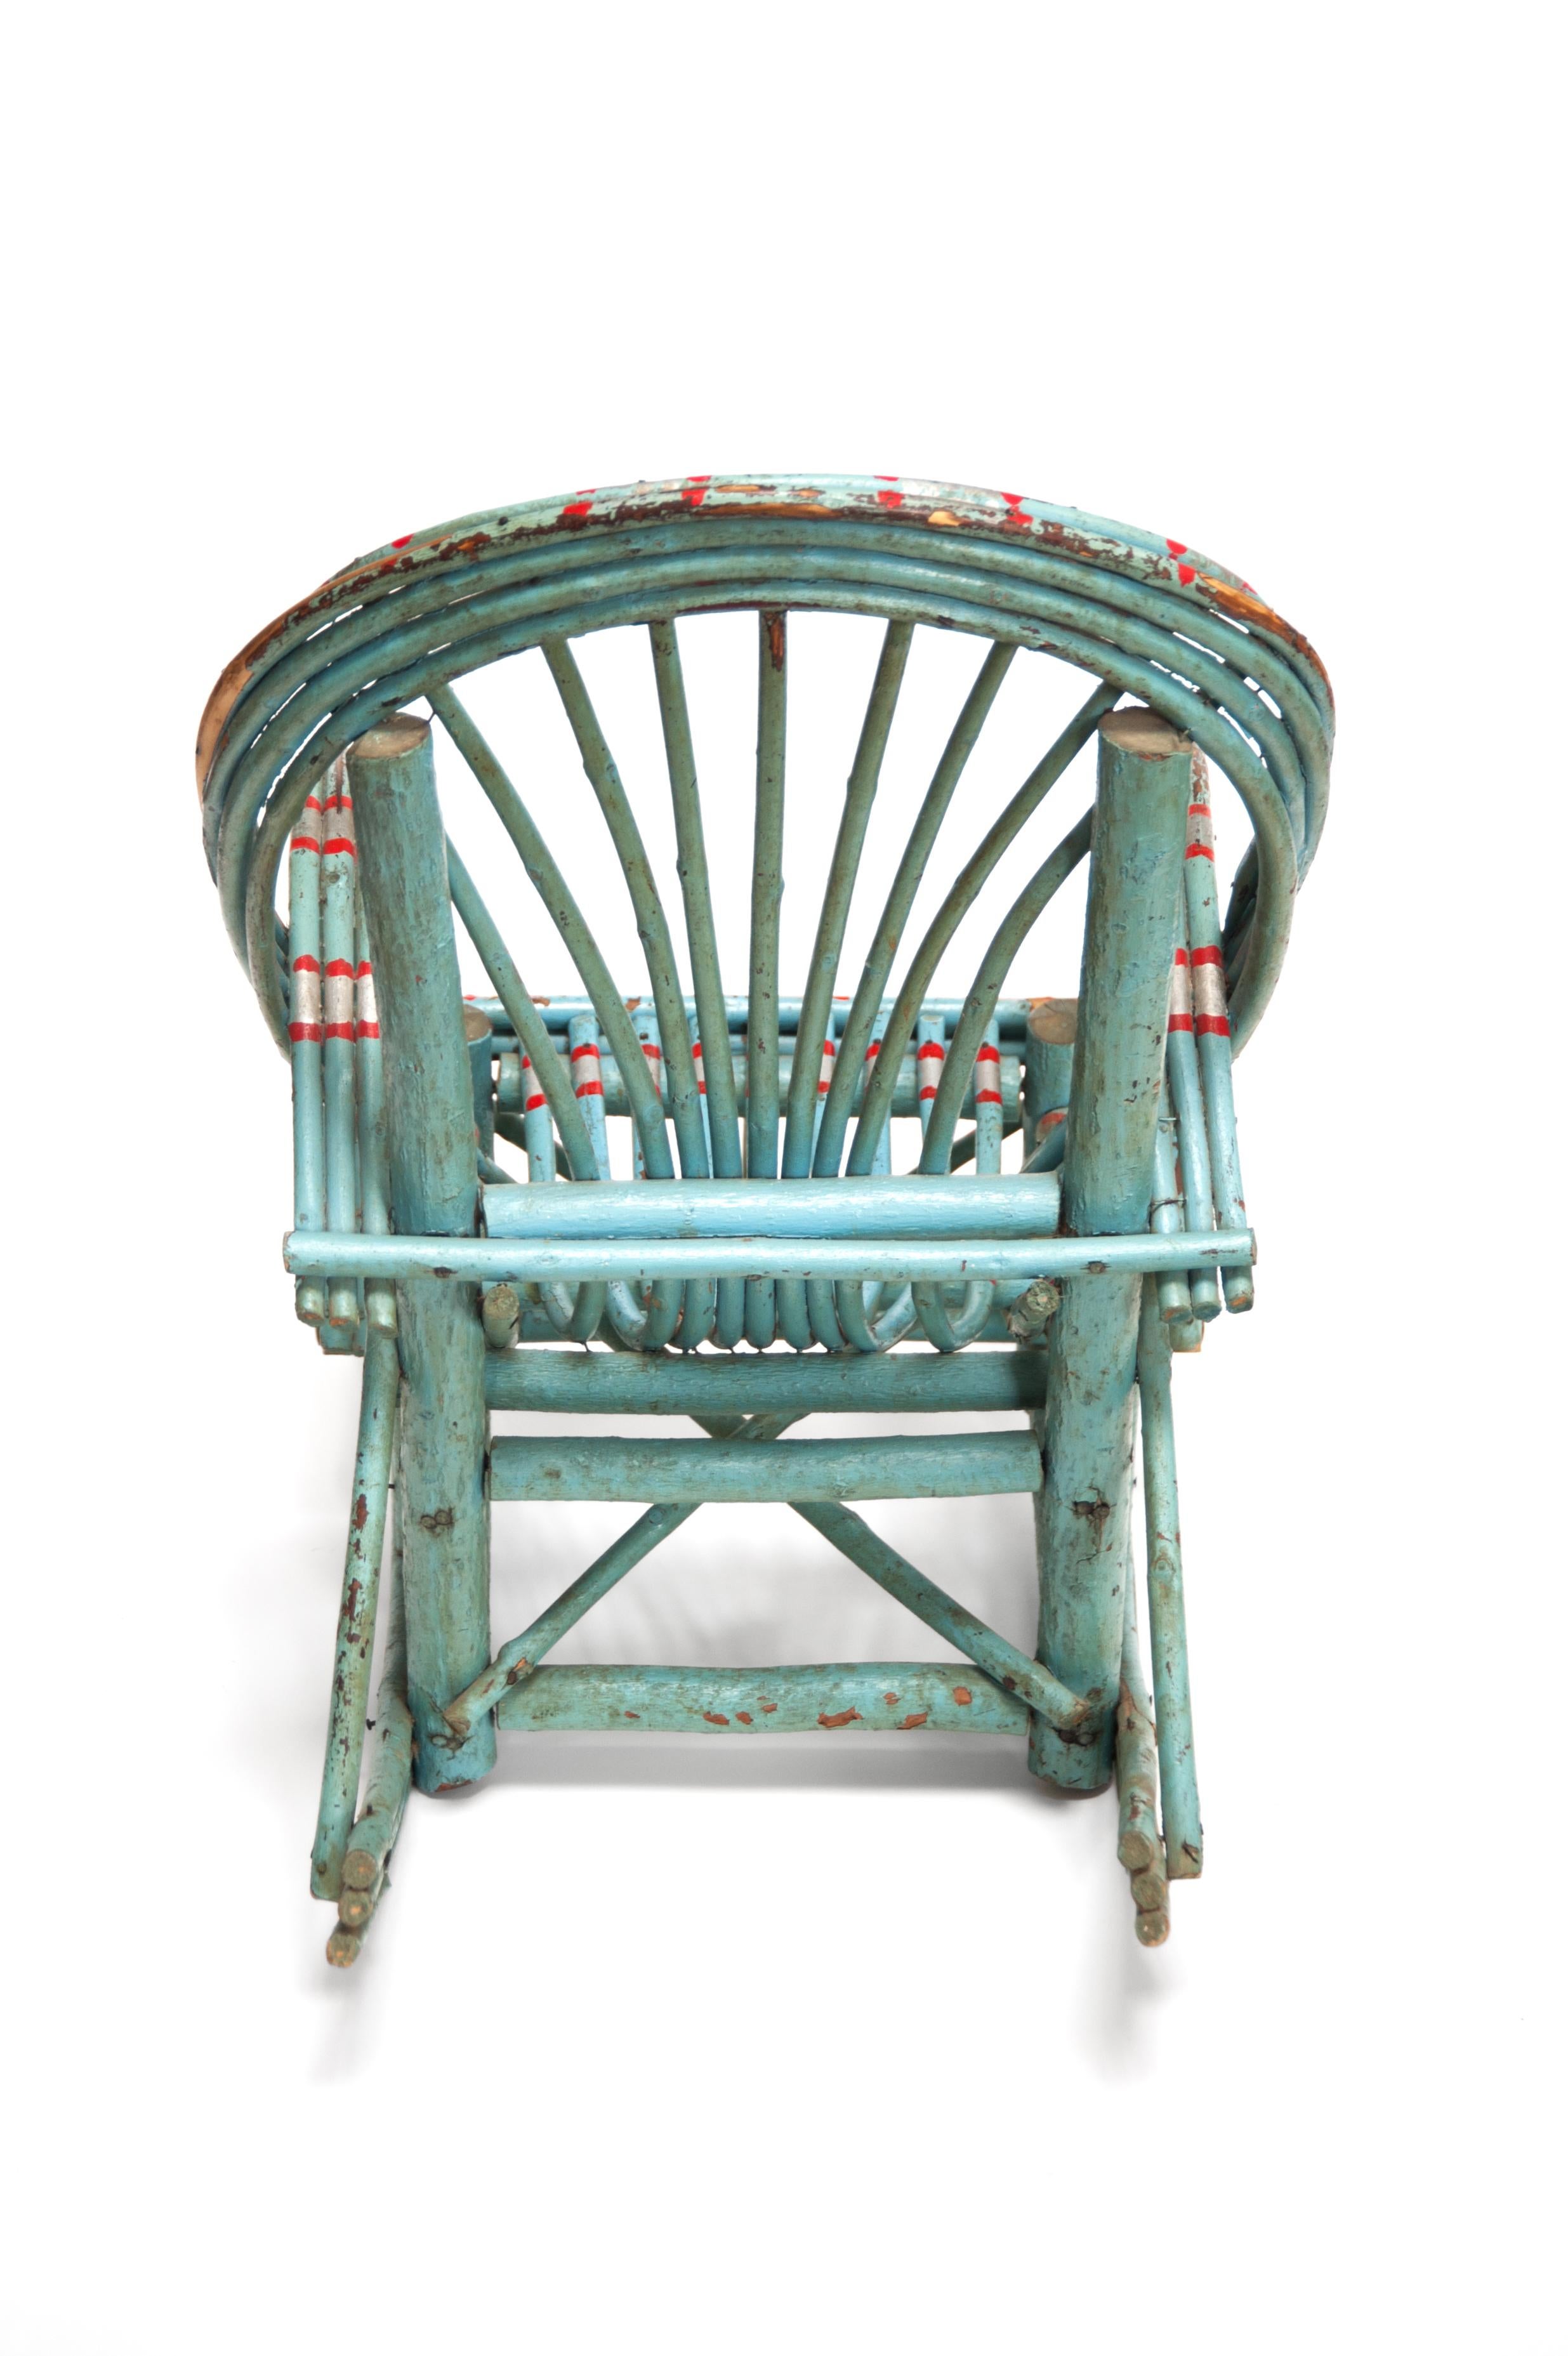 American Handcrafted Folk Art Rocking Chair, Designer Unknown, USA, 1910s